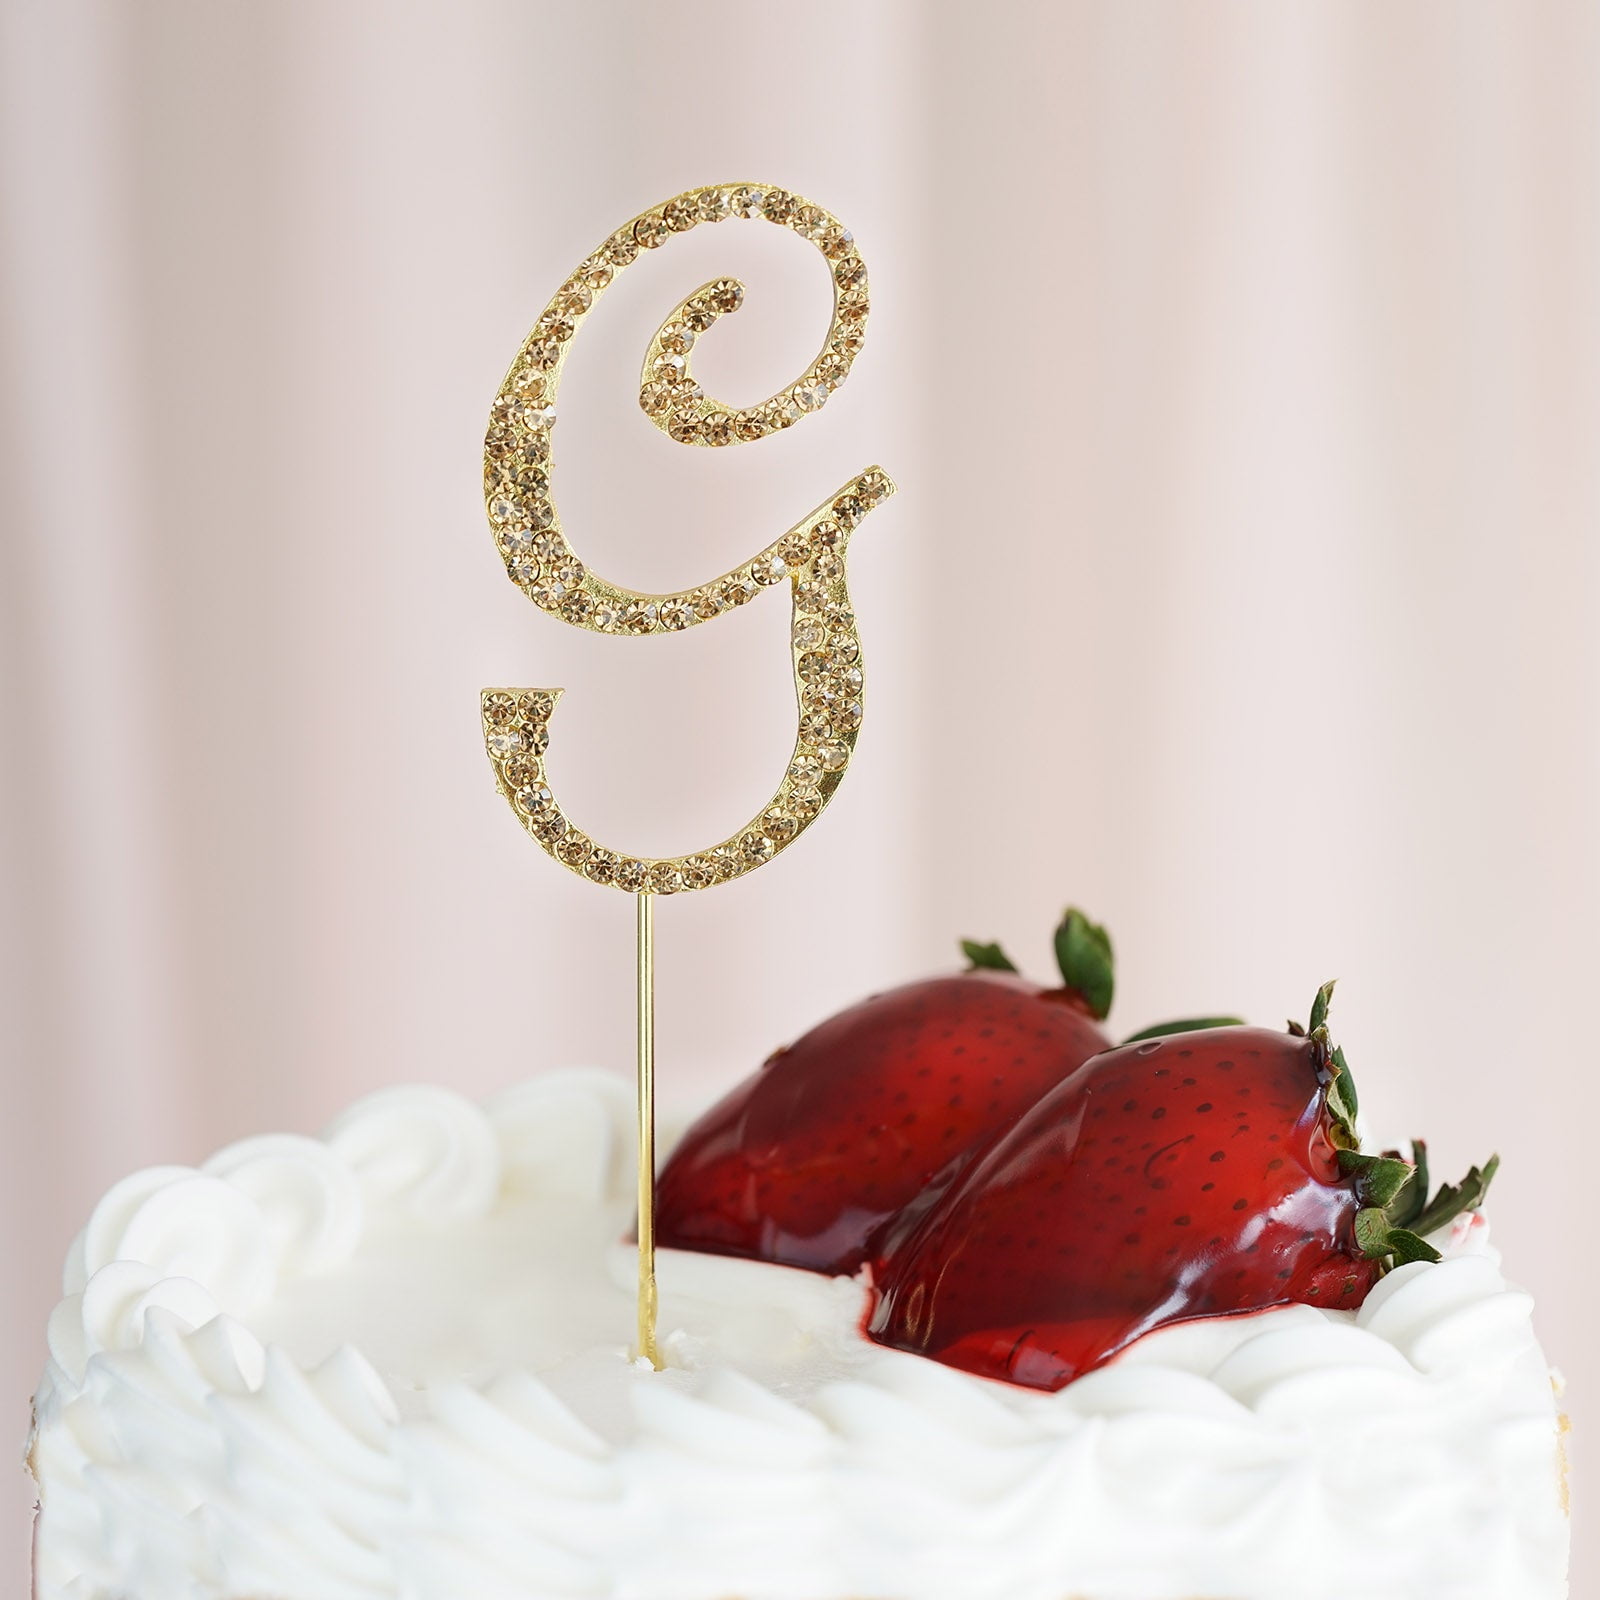 GOLD Plated Rhinestone  Monogram Letter “E”  Wedding Cake Topper  5" inch high 